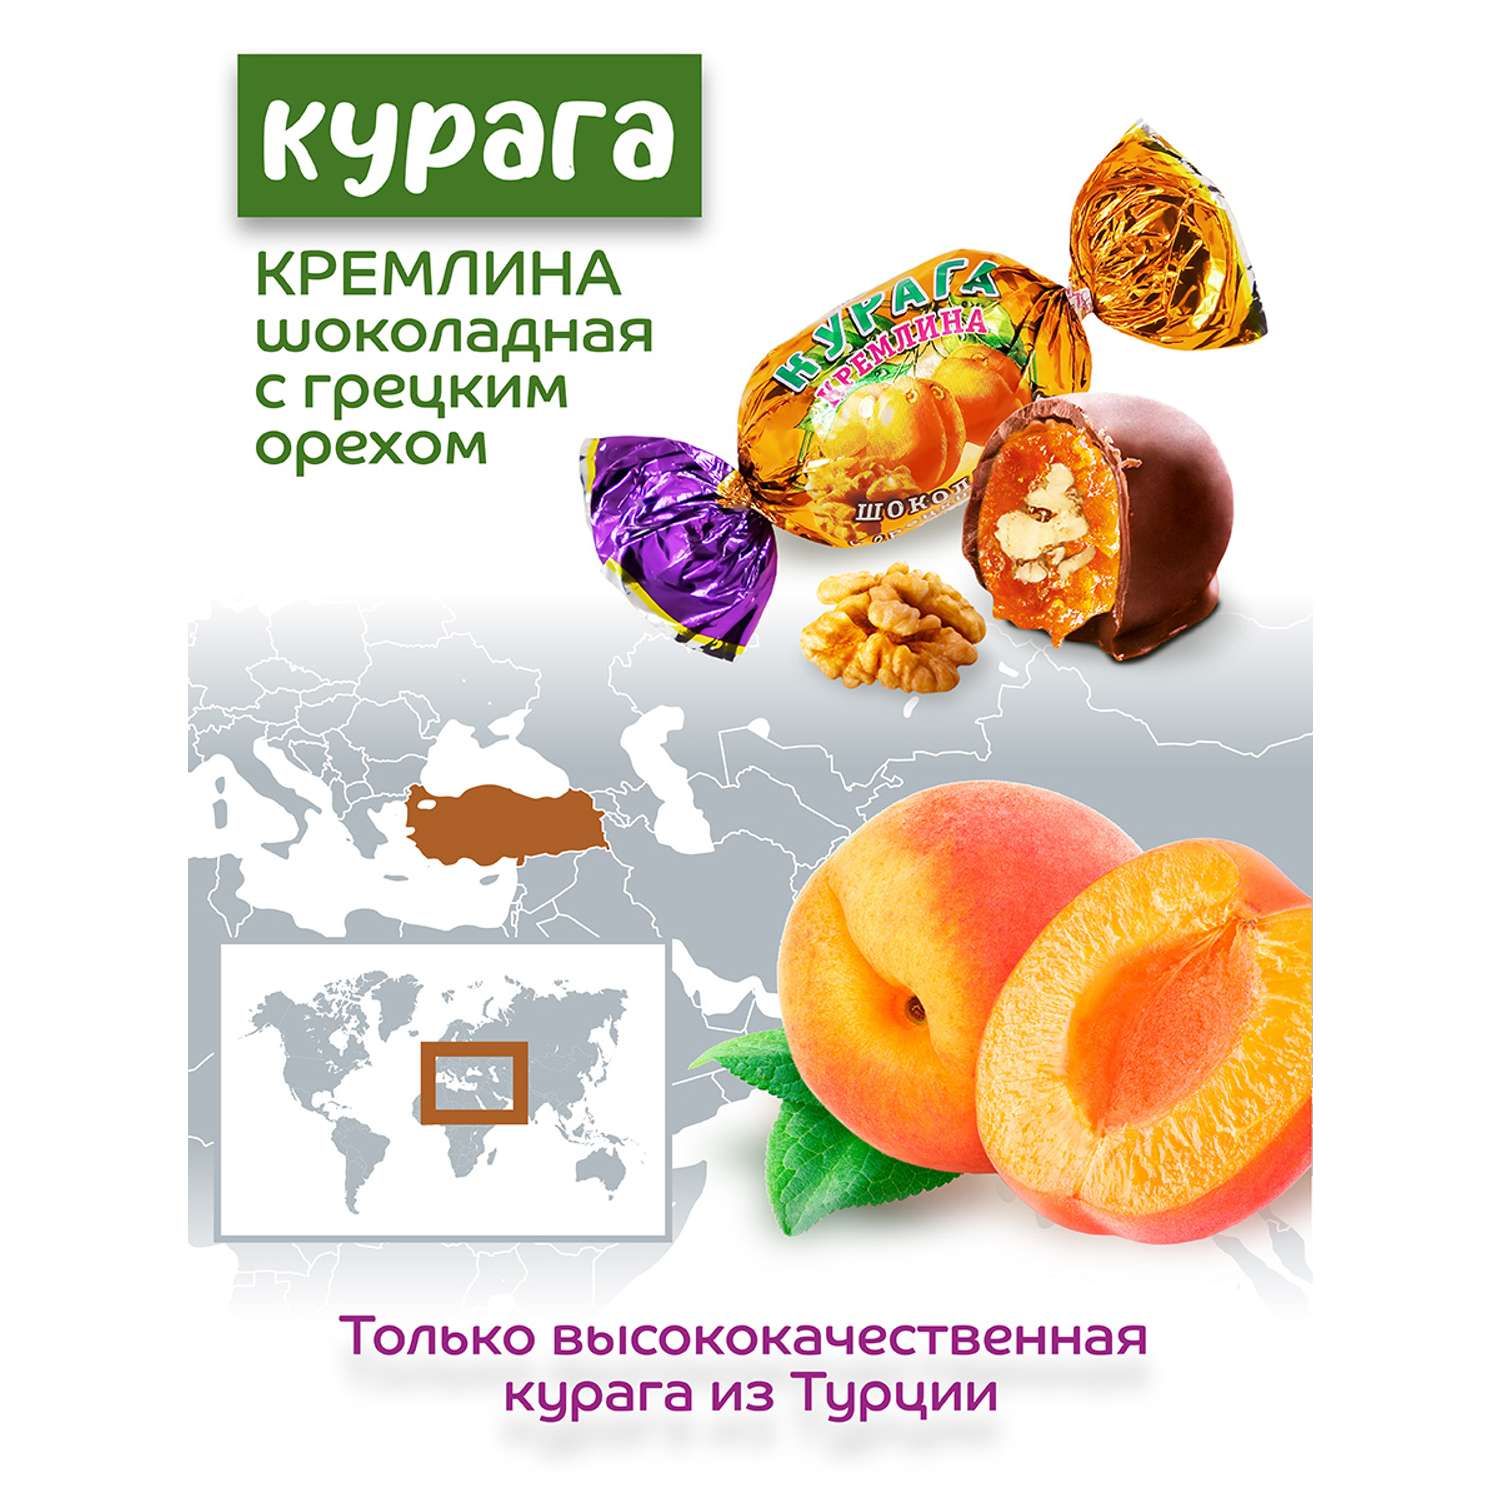 Конфеты курага в глазури Кремлина с грецким орехом спайка 2 шт по 190 гр - фото 3